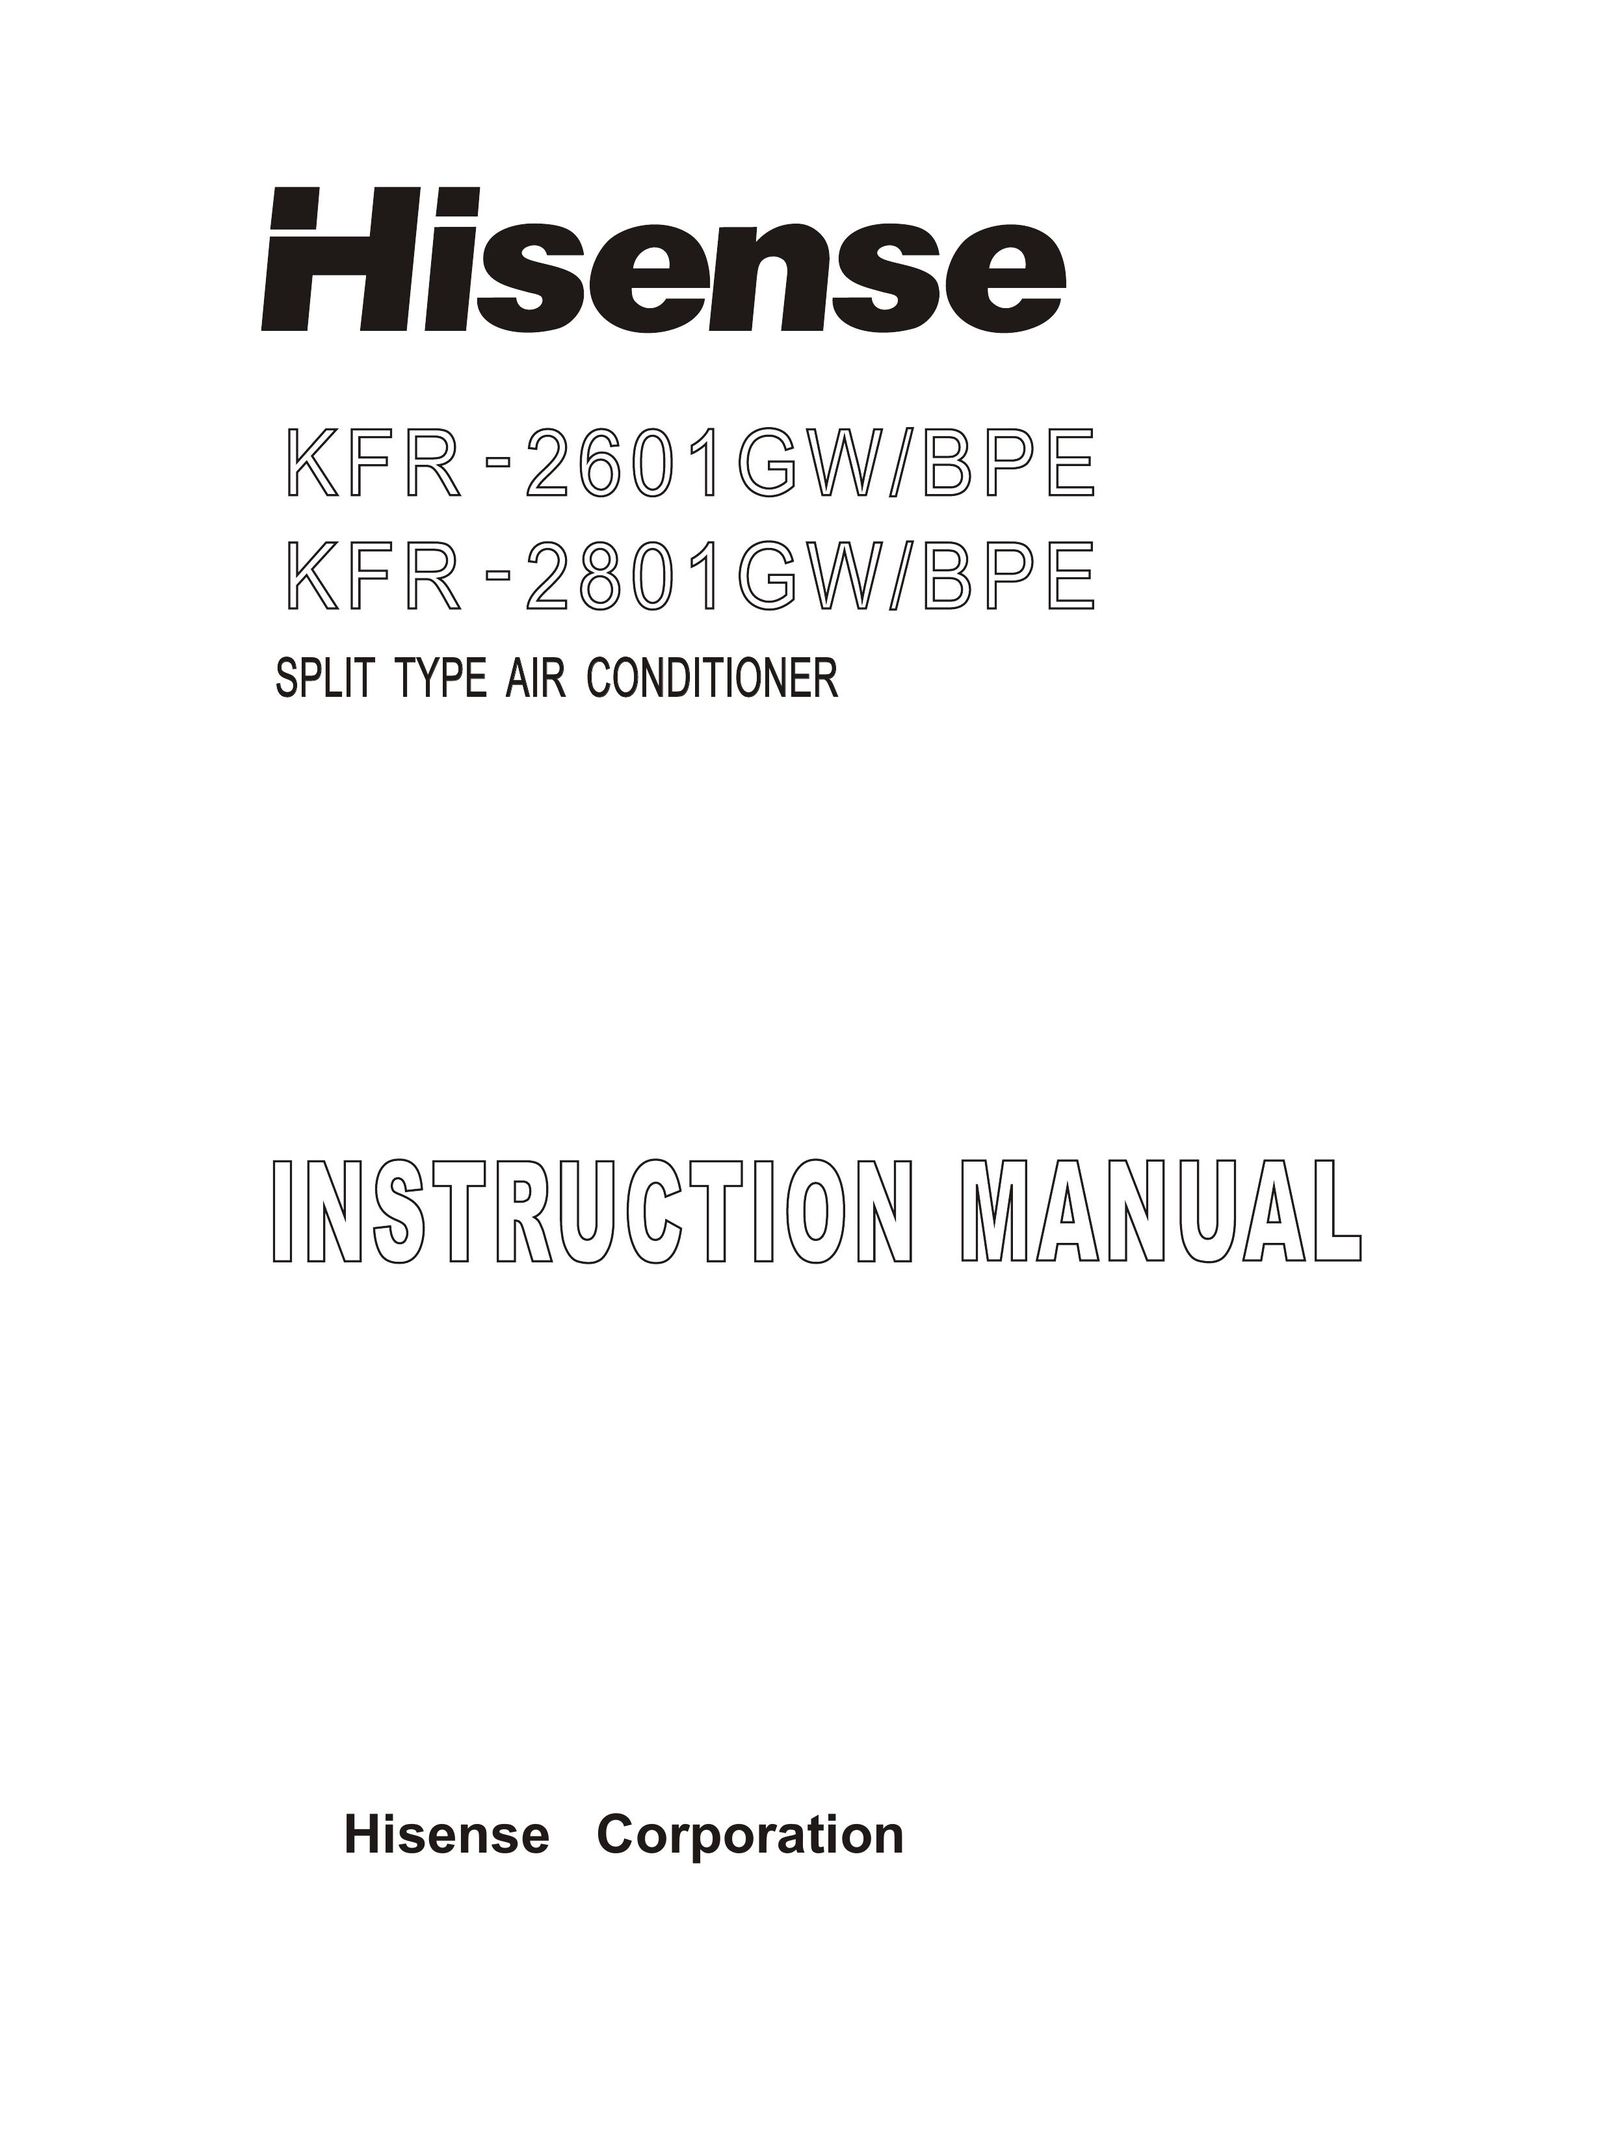 Hisense Group KFR 2801GW/BPE Air Conditioner User Manual